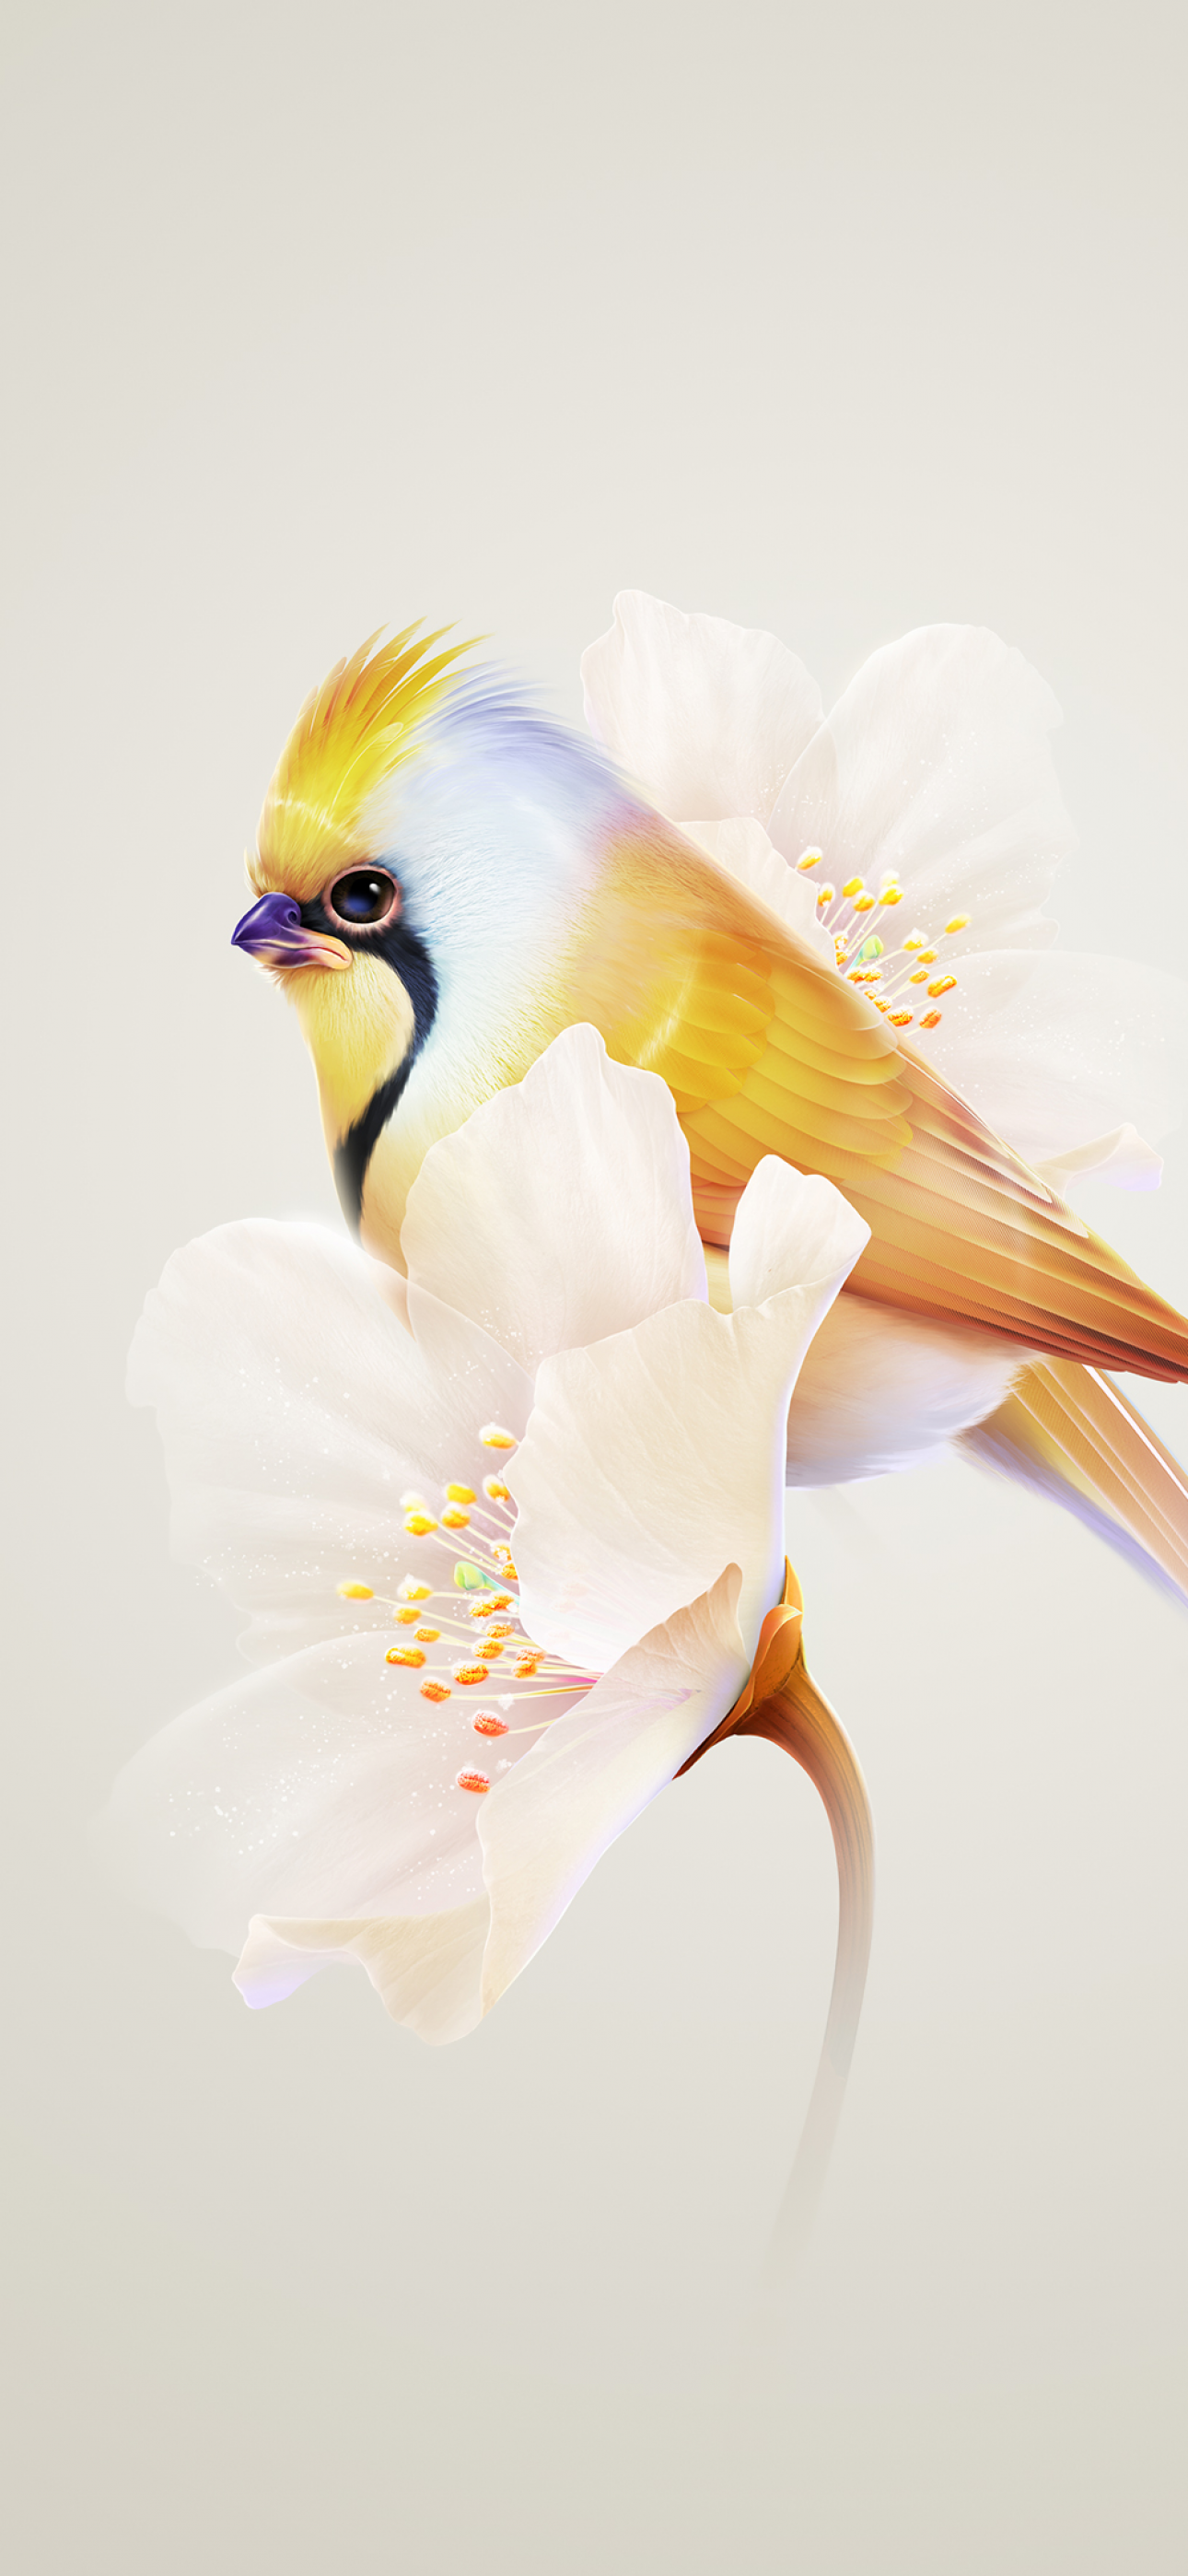 Birds Pair Feeders On Pink Flower Wallpaper For Desktop  Wallpapers13com